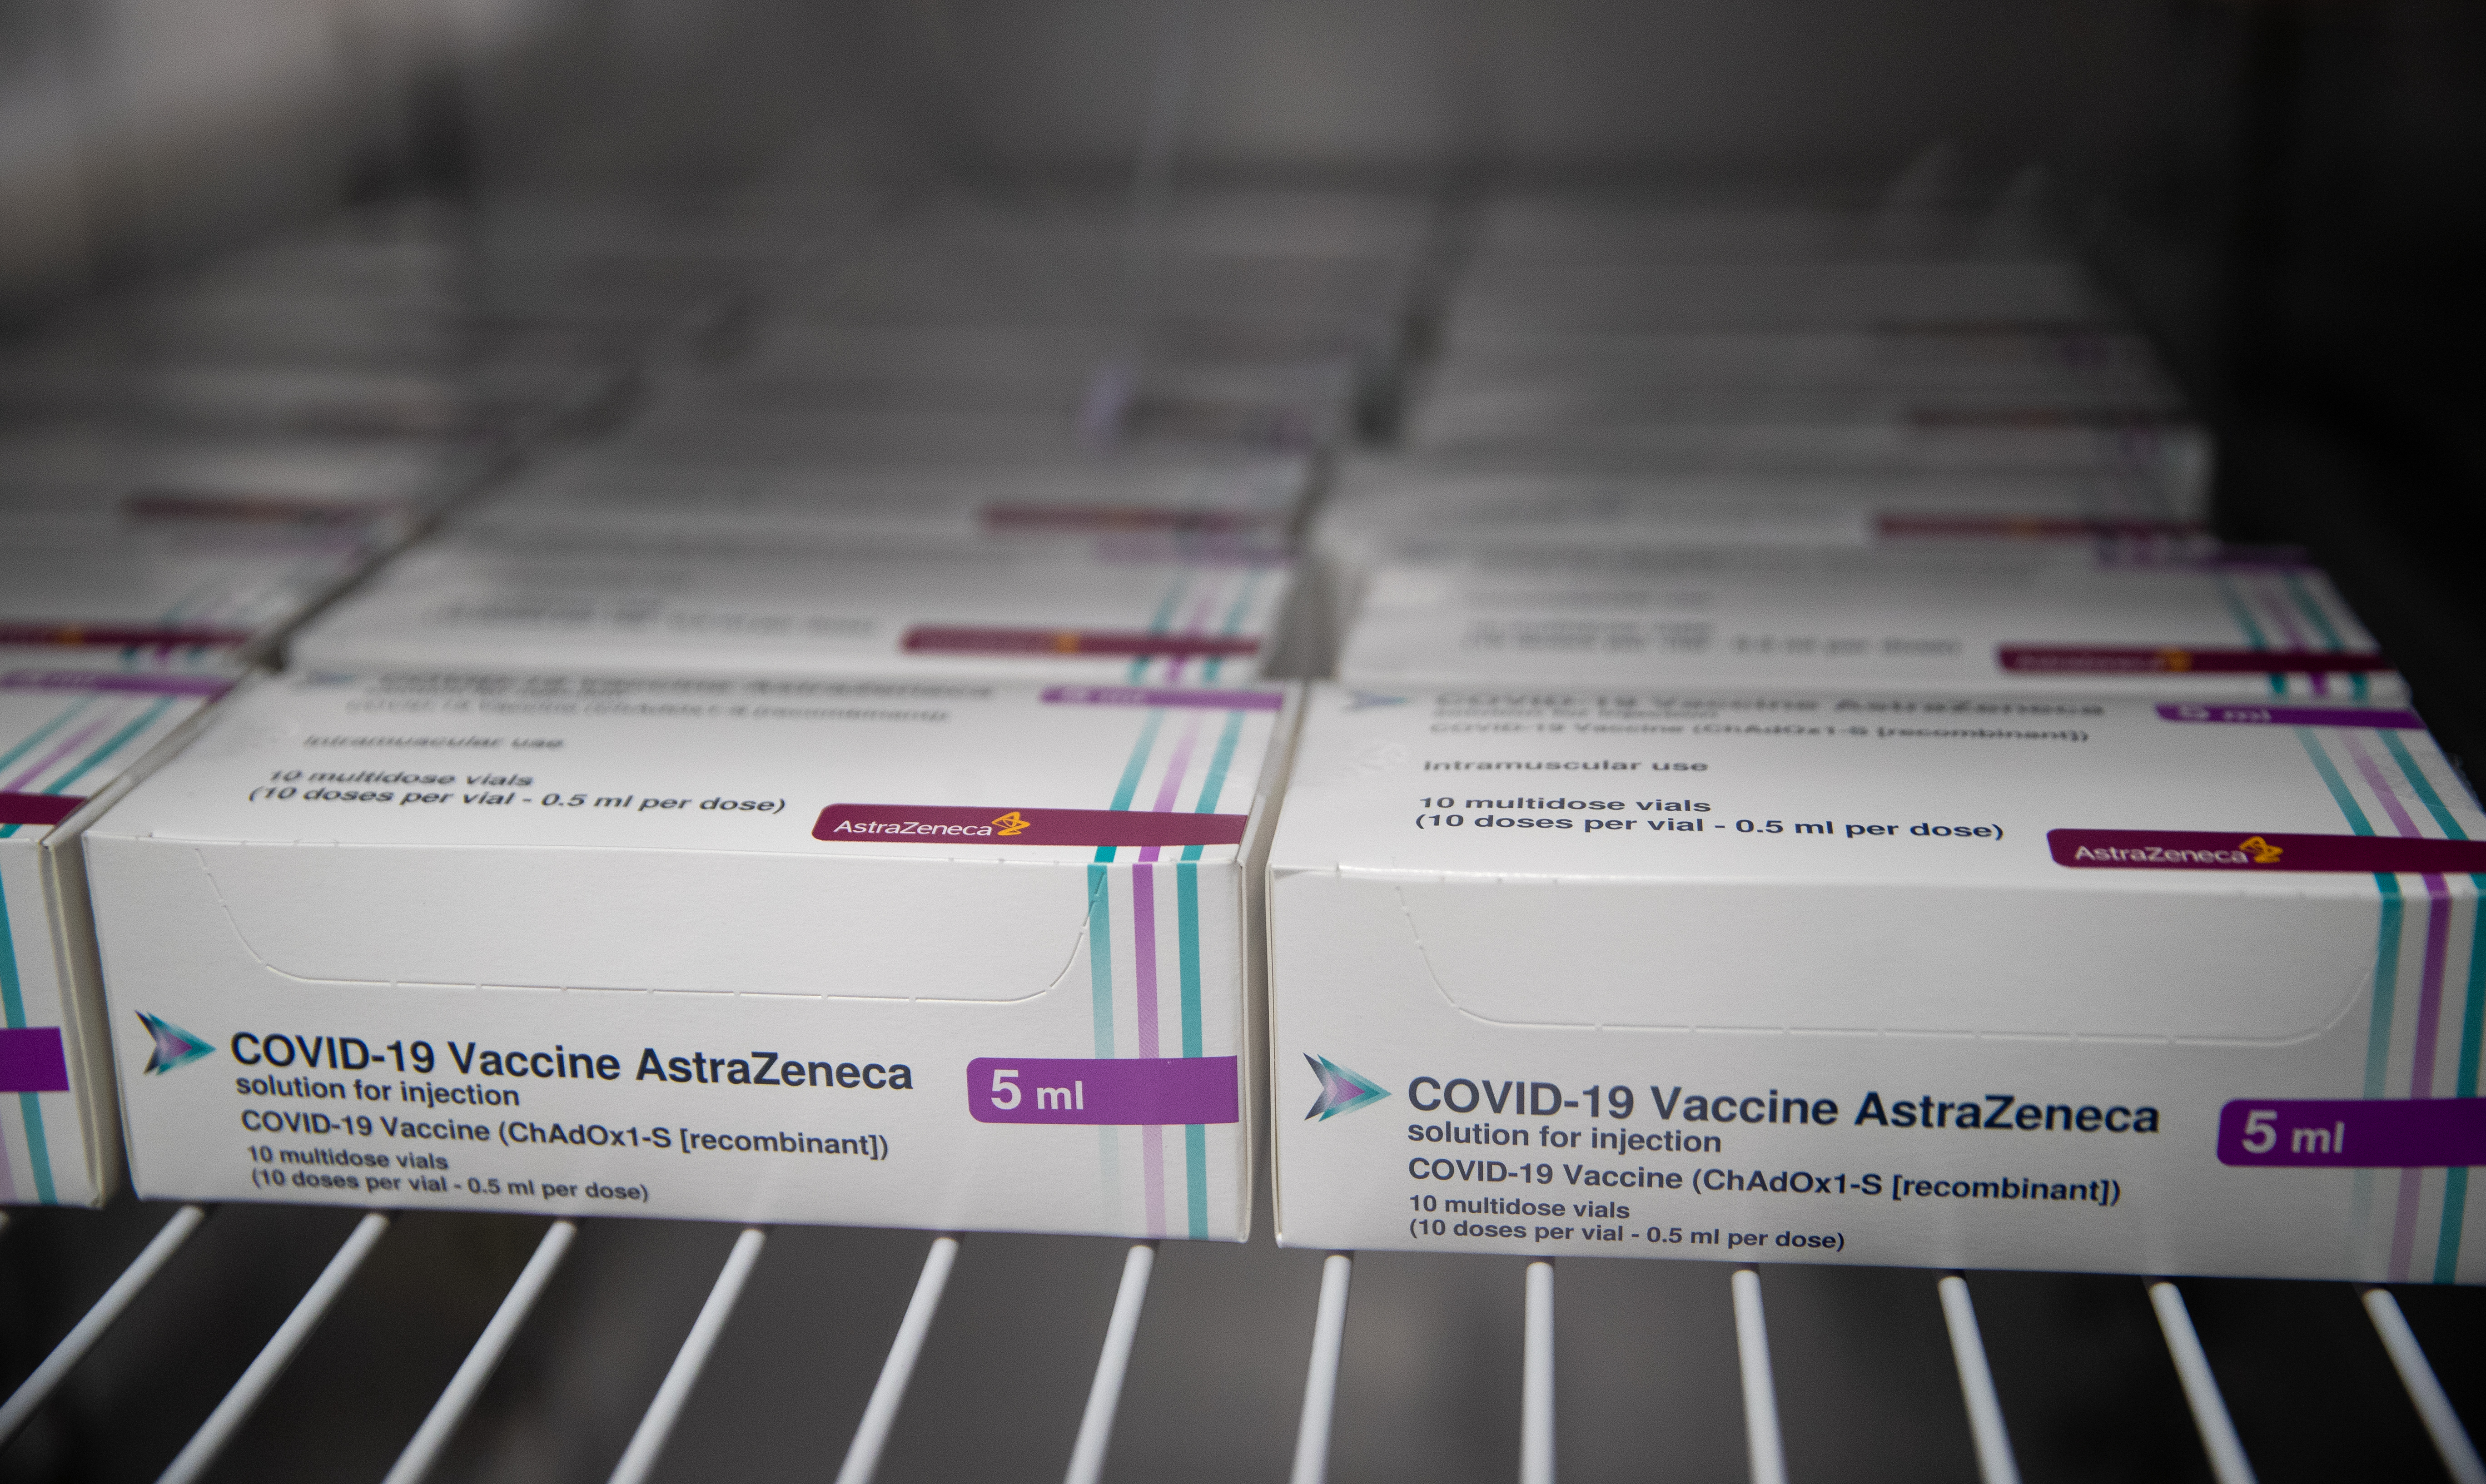 AstraZeneca's coronavirus vaccine was developed with the University of Oxford.